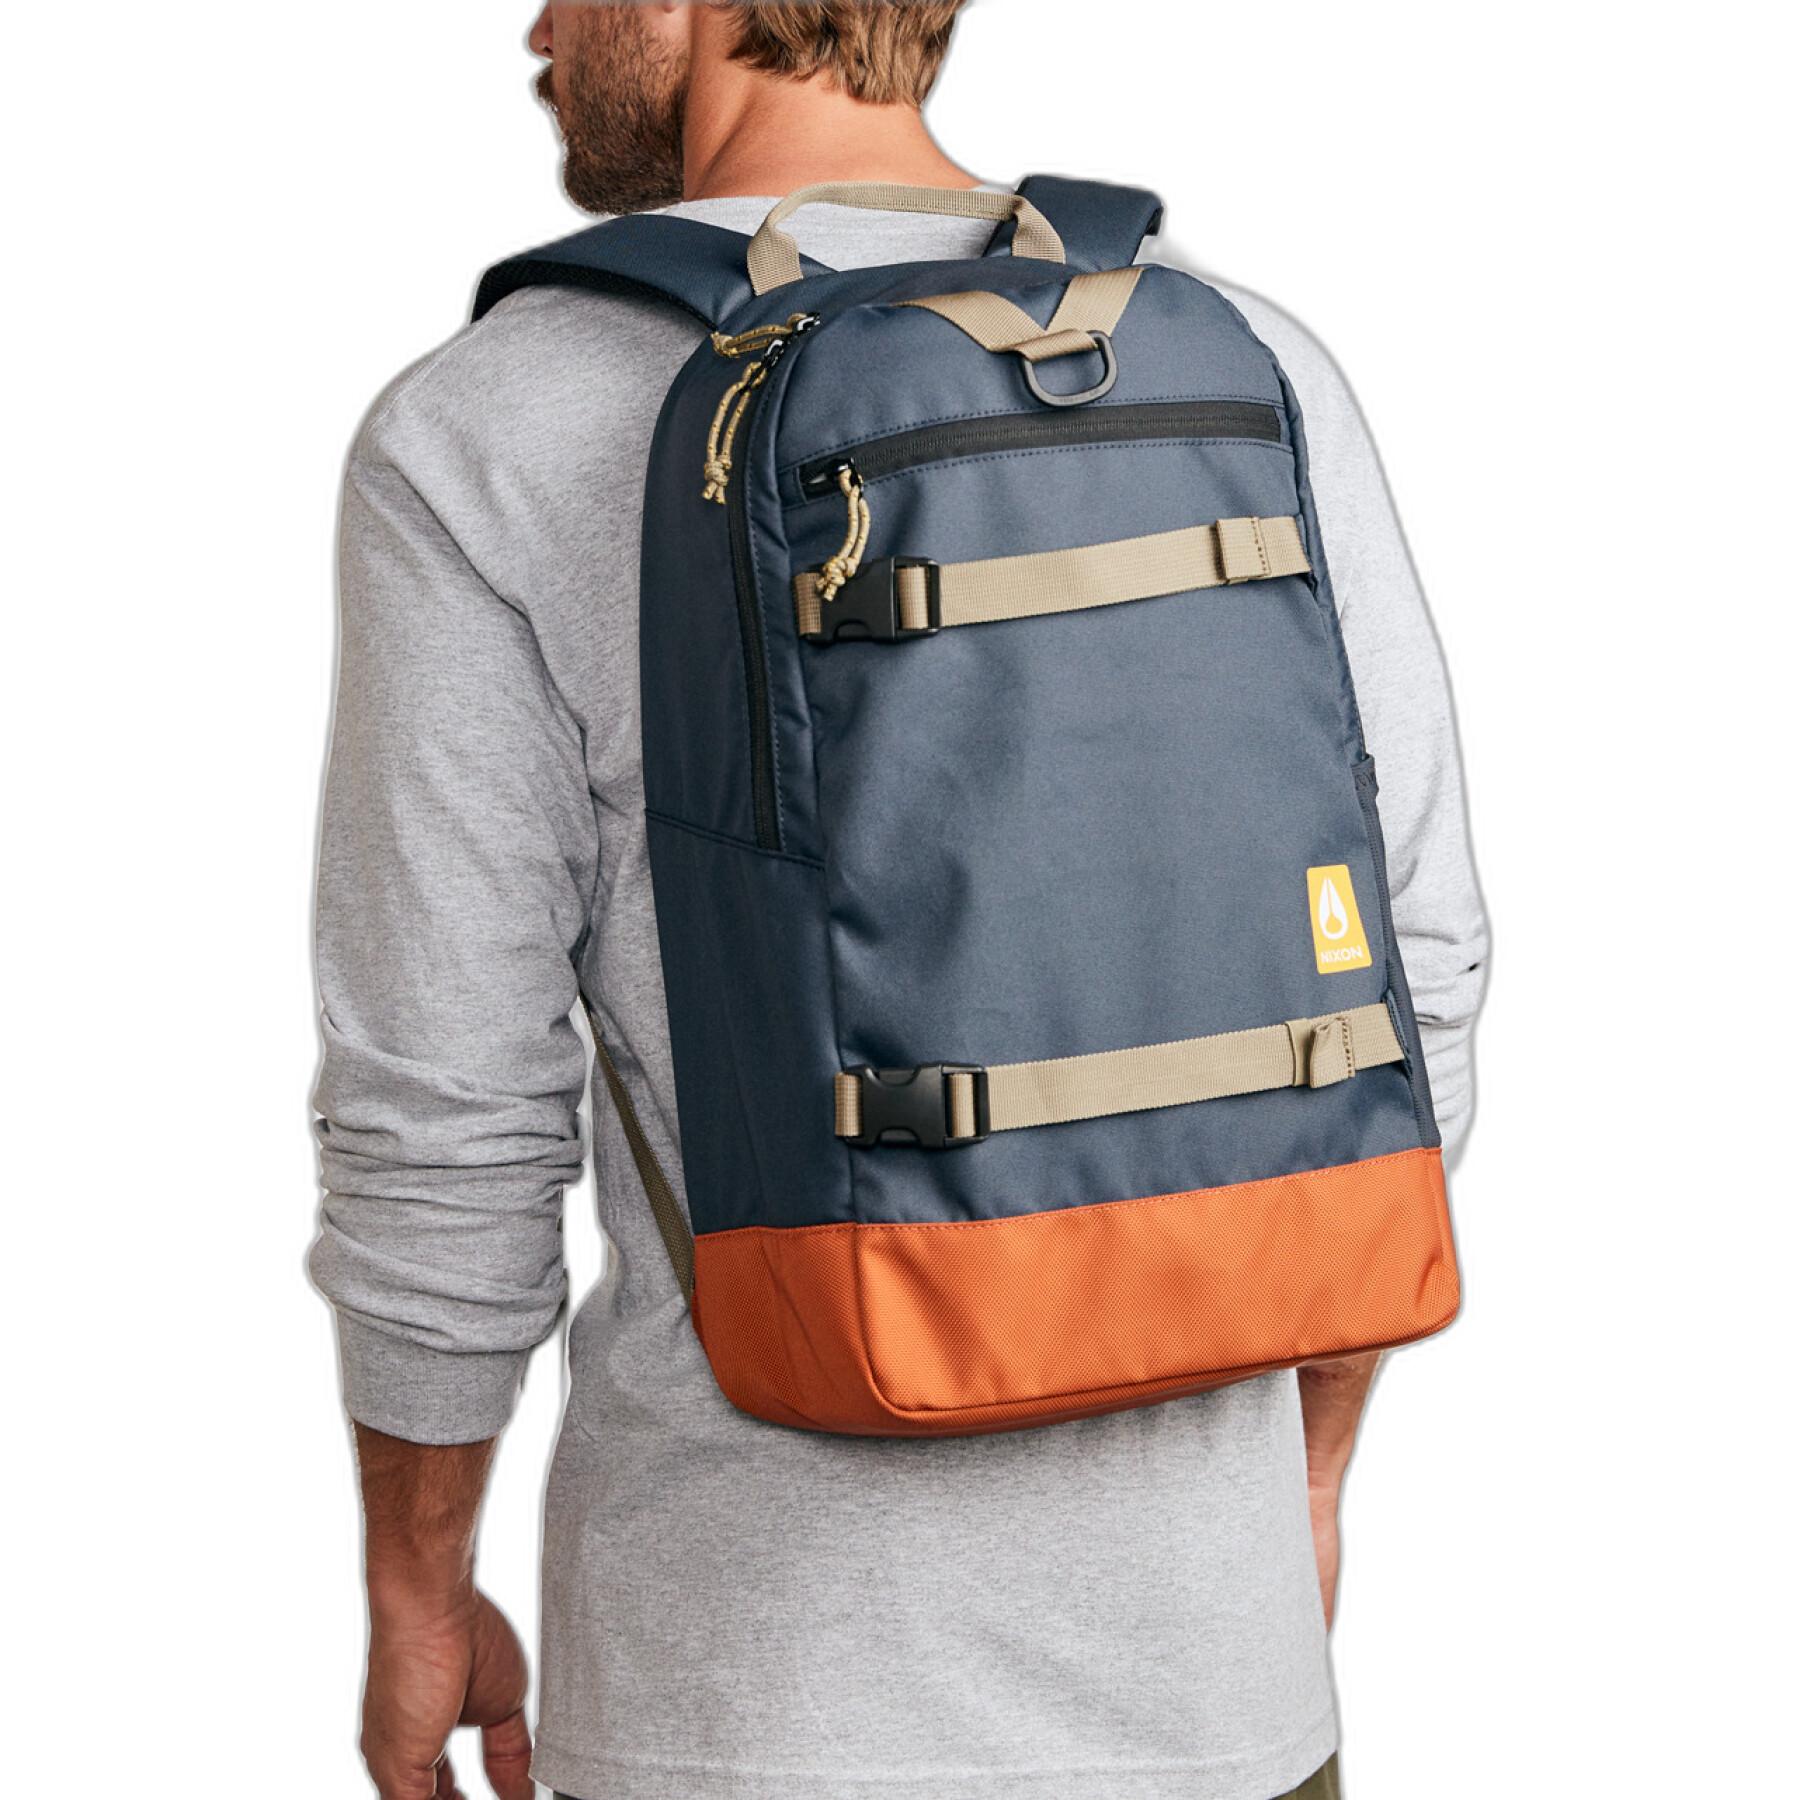 Backpack Nixon Ransack - Backpacks - Bags & Luggage - Accessories